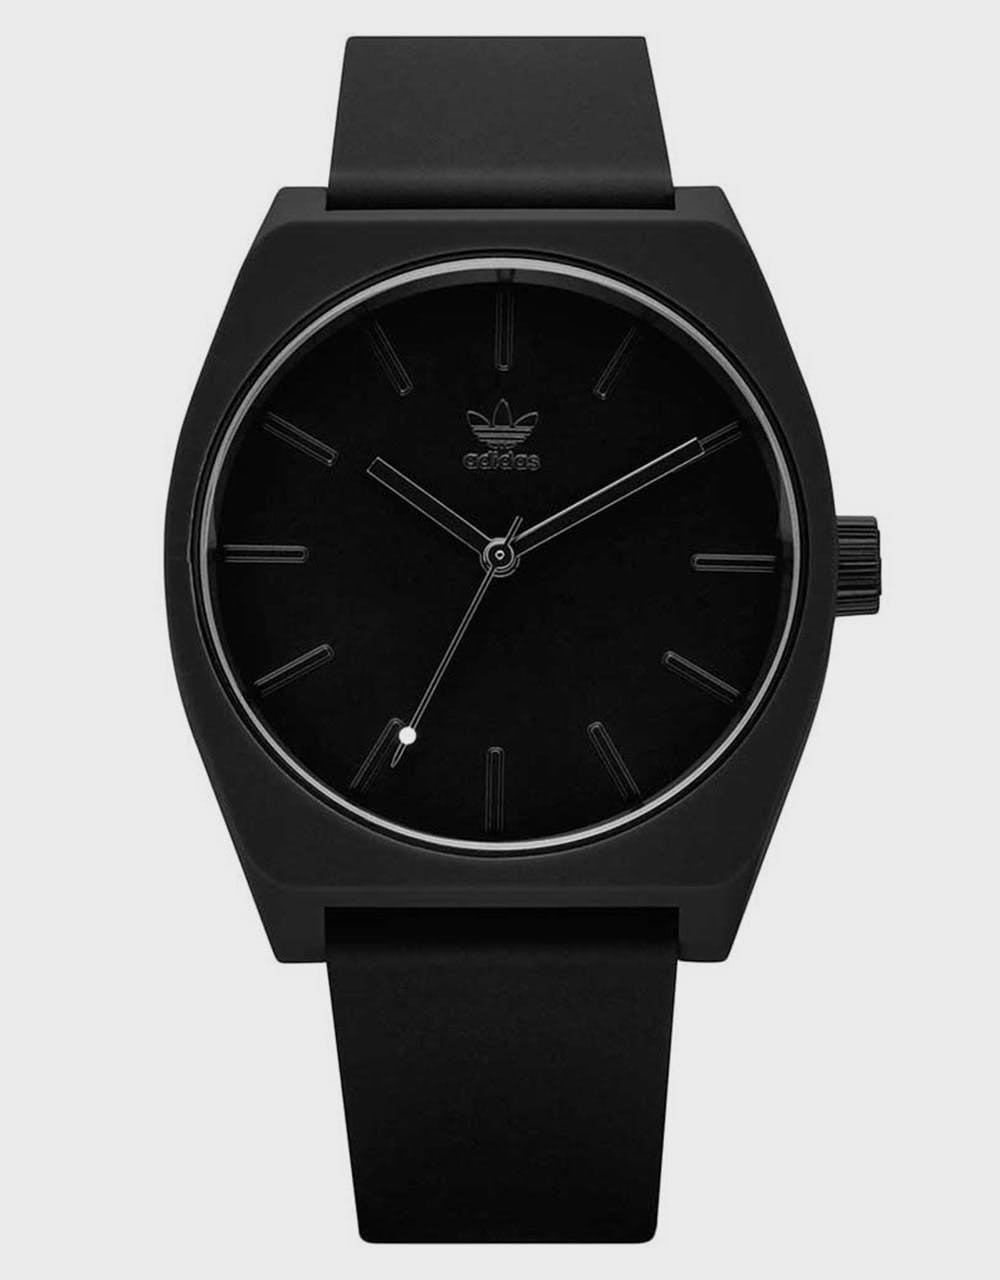 Adidas Process SP1 Watch - All Black